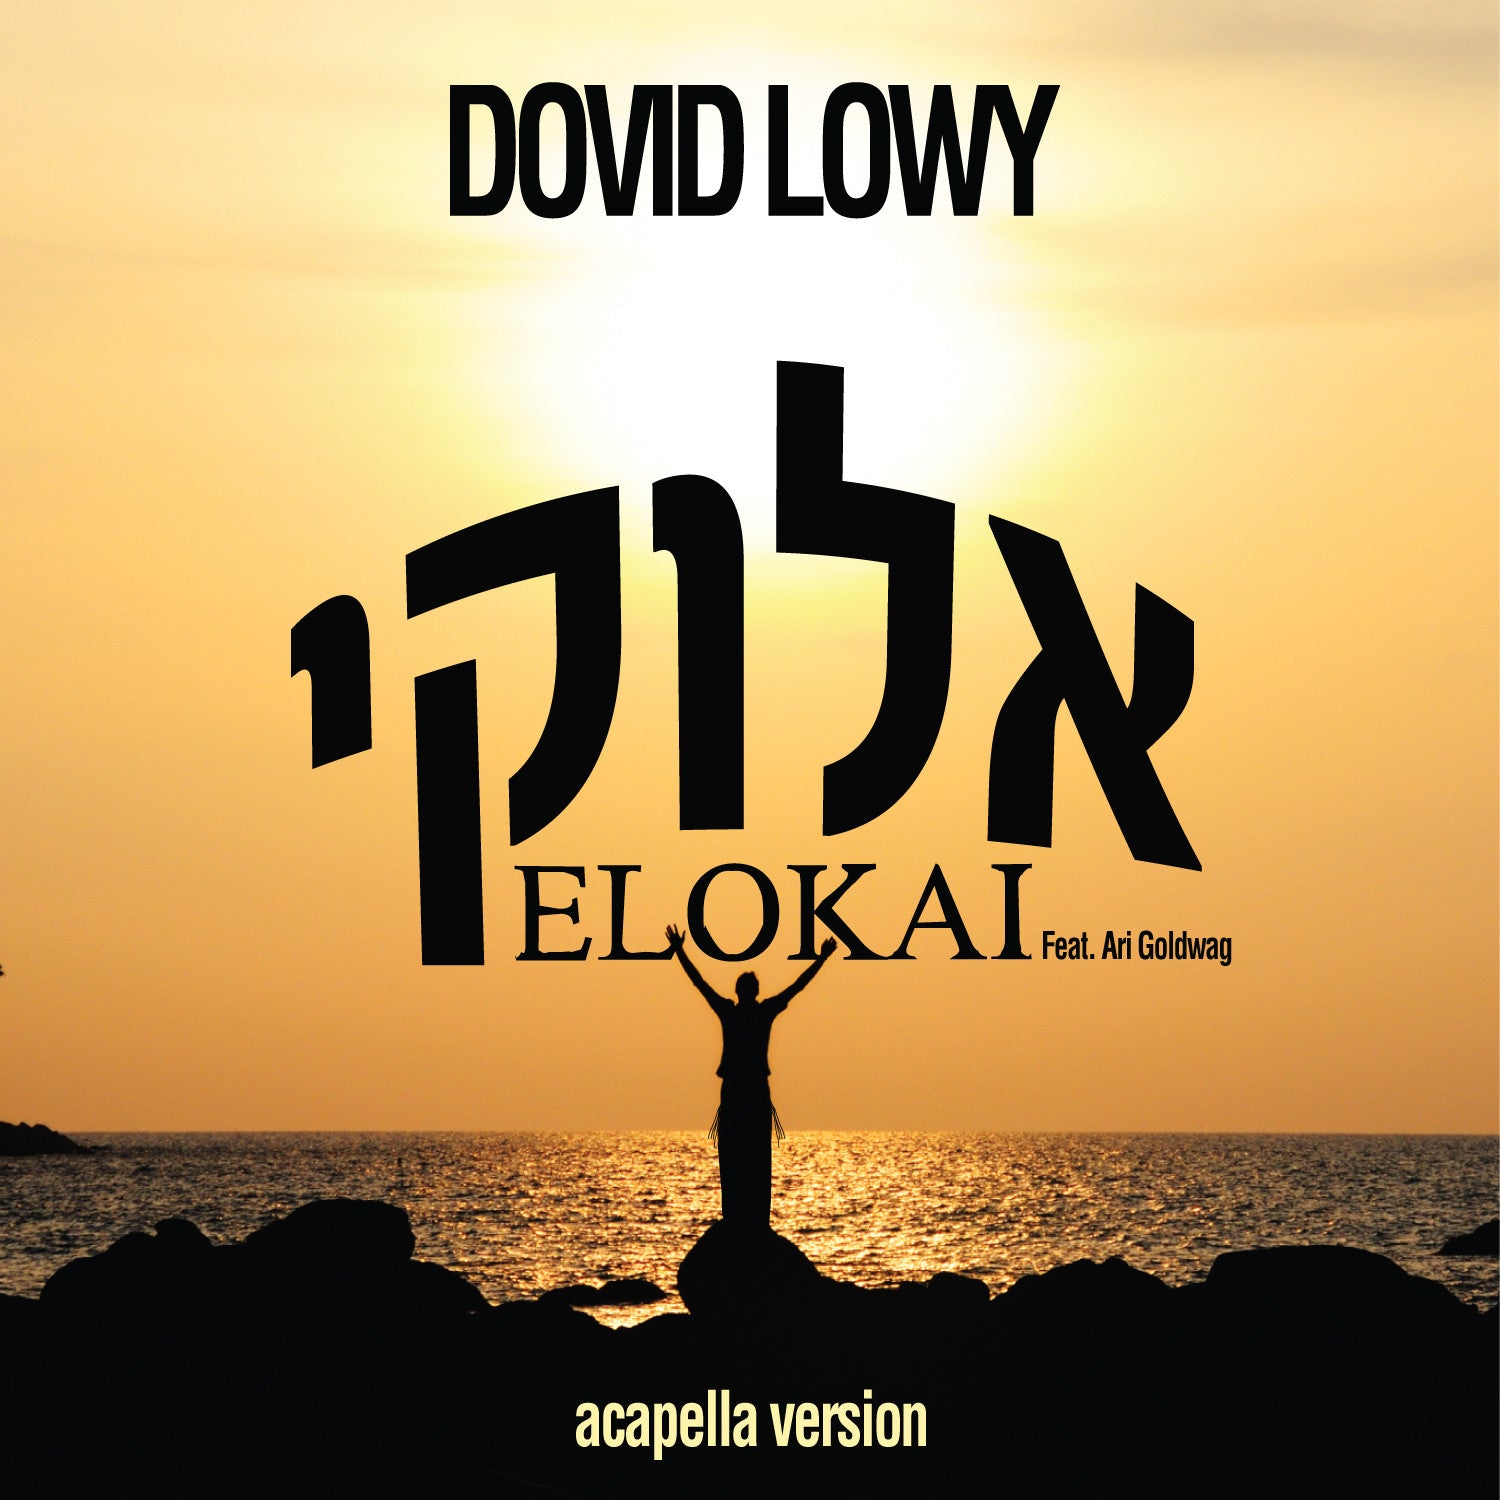 Dovid Lowy - Elokai - Free Acapella single - feat. Ari Goldwag